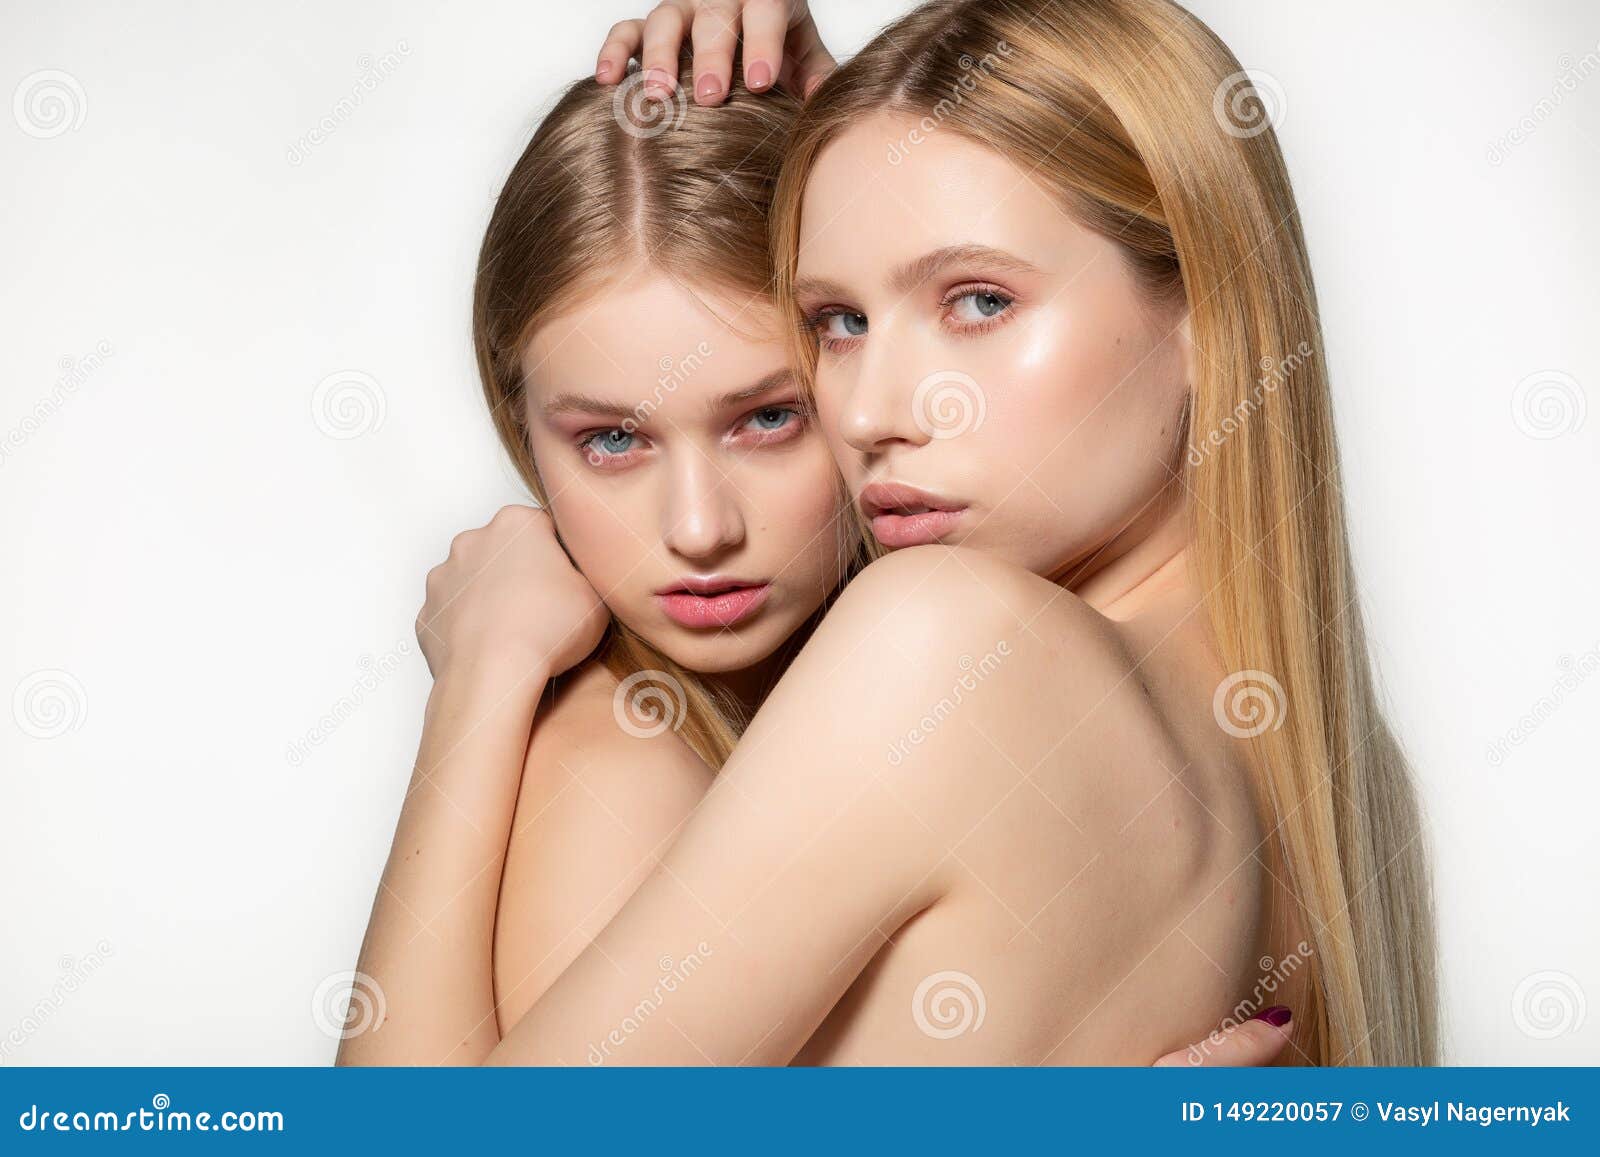 Lesbian Sex In Spa